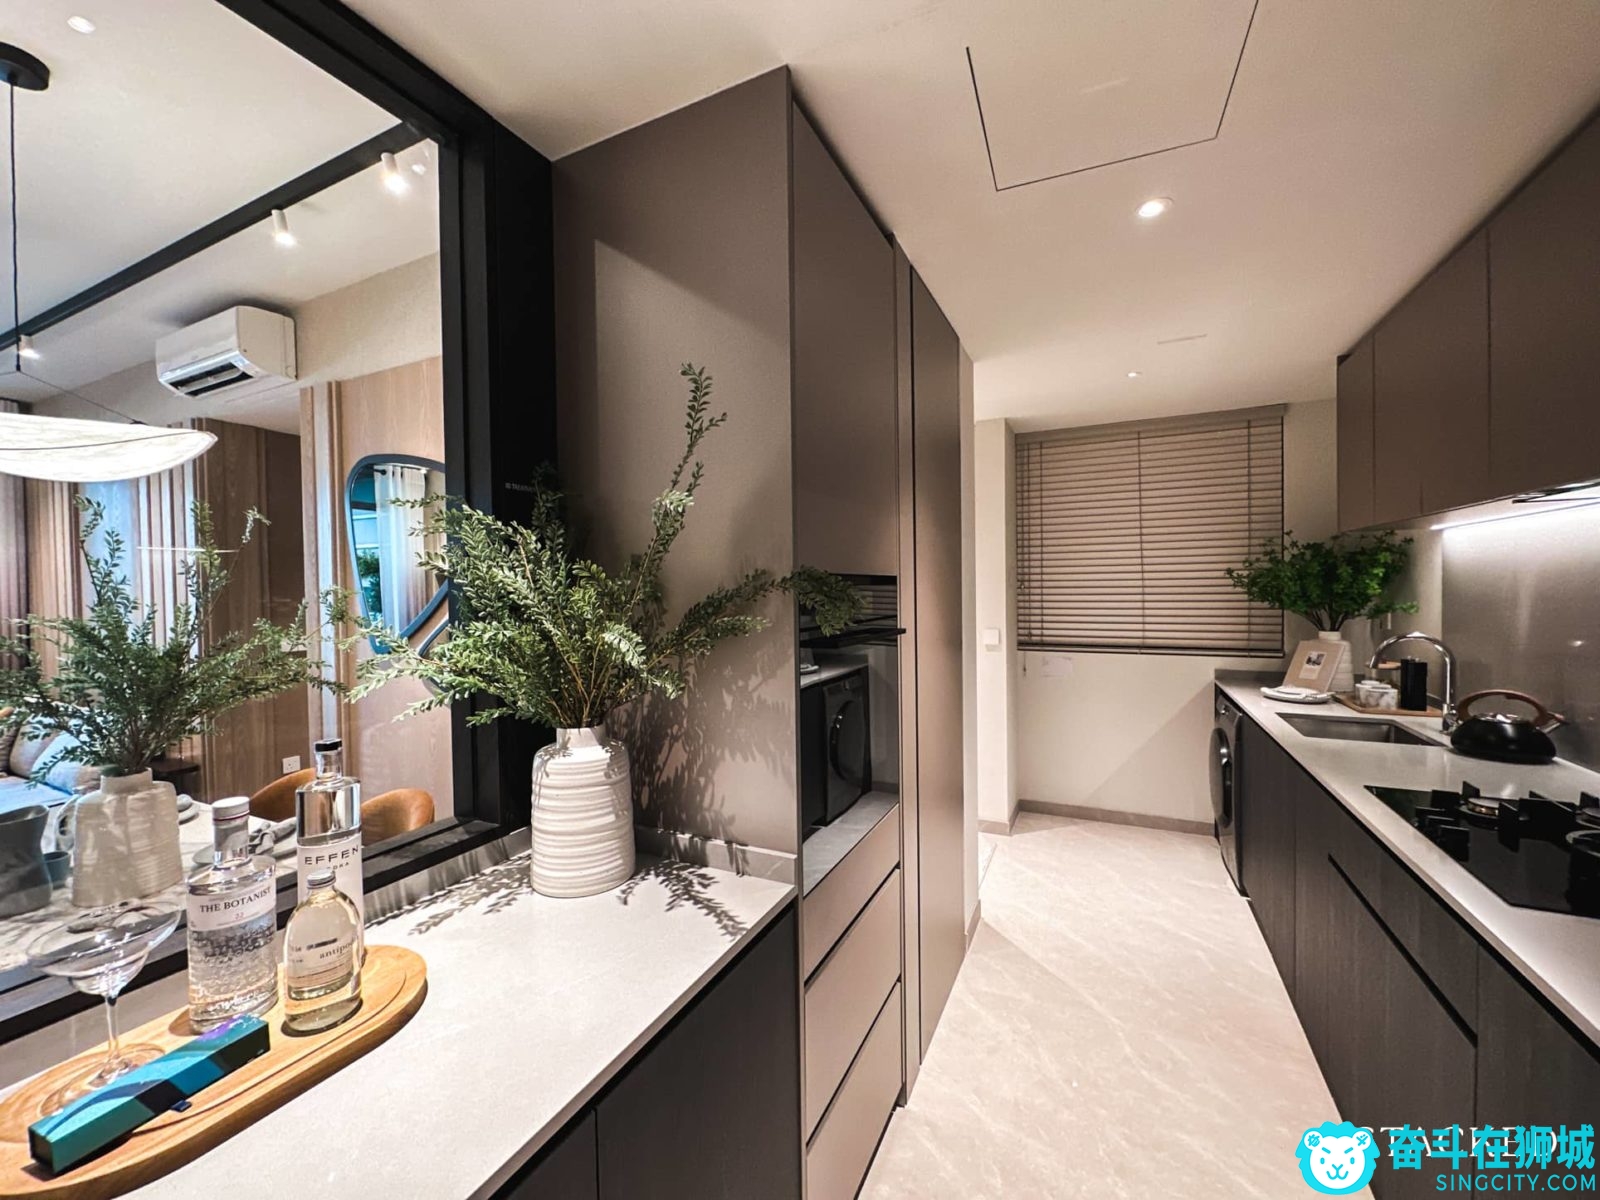 the-continuum-3-bedroom-premier-kitchen-1600x1200.jpg